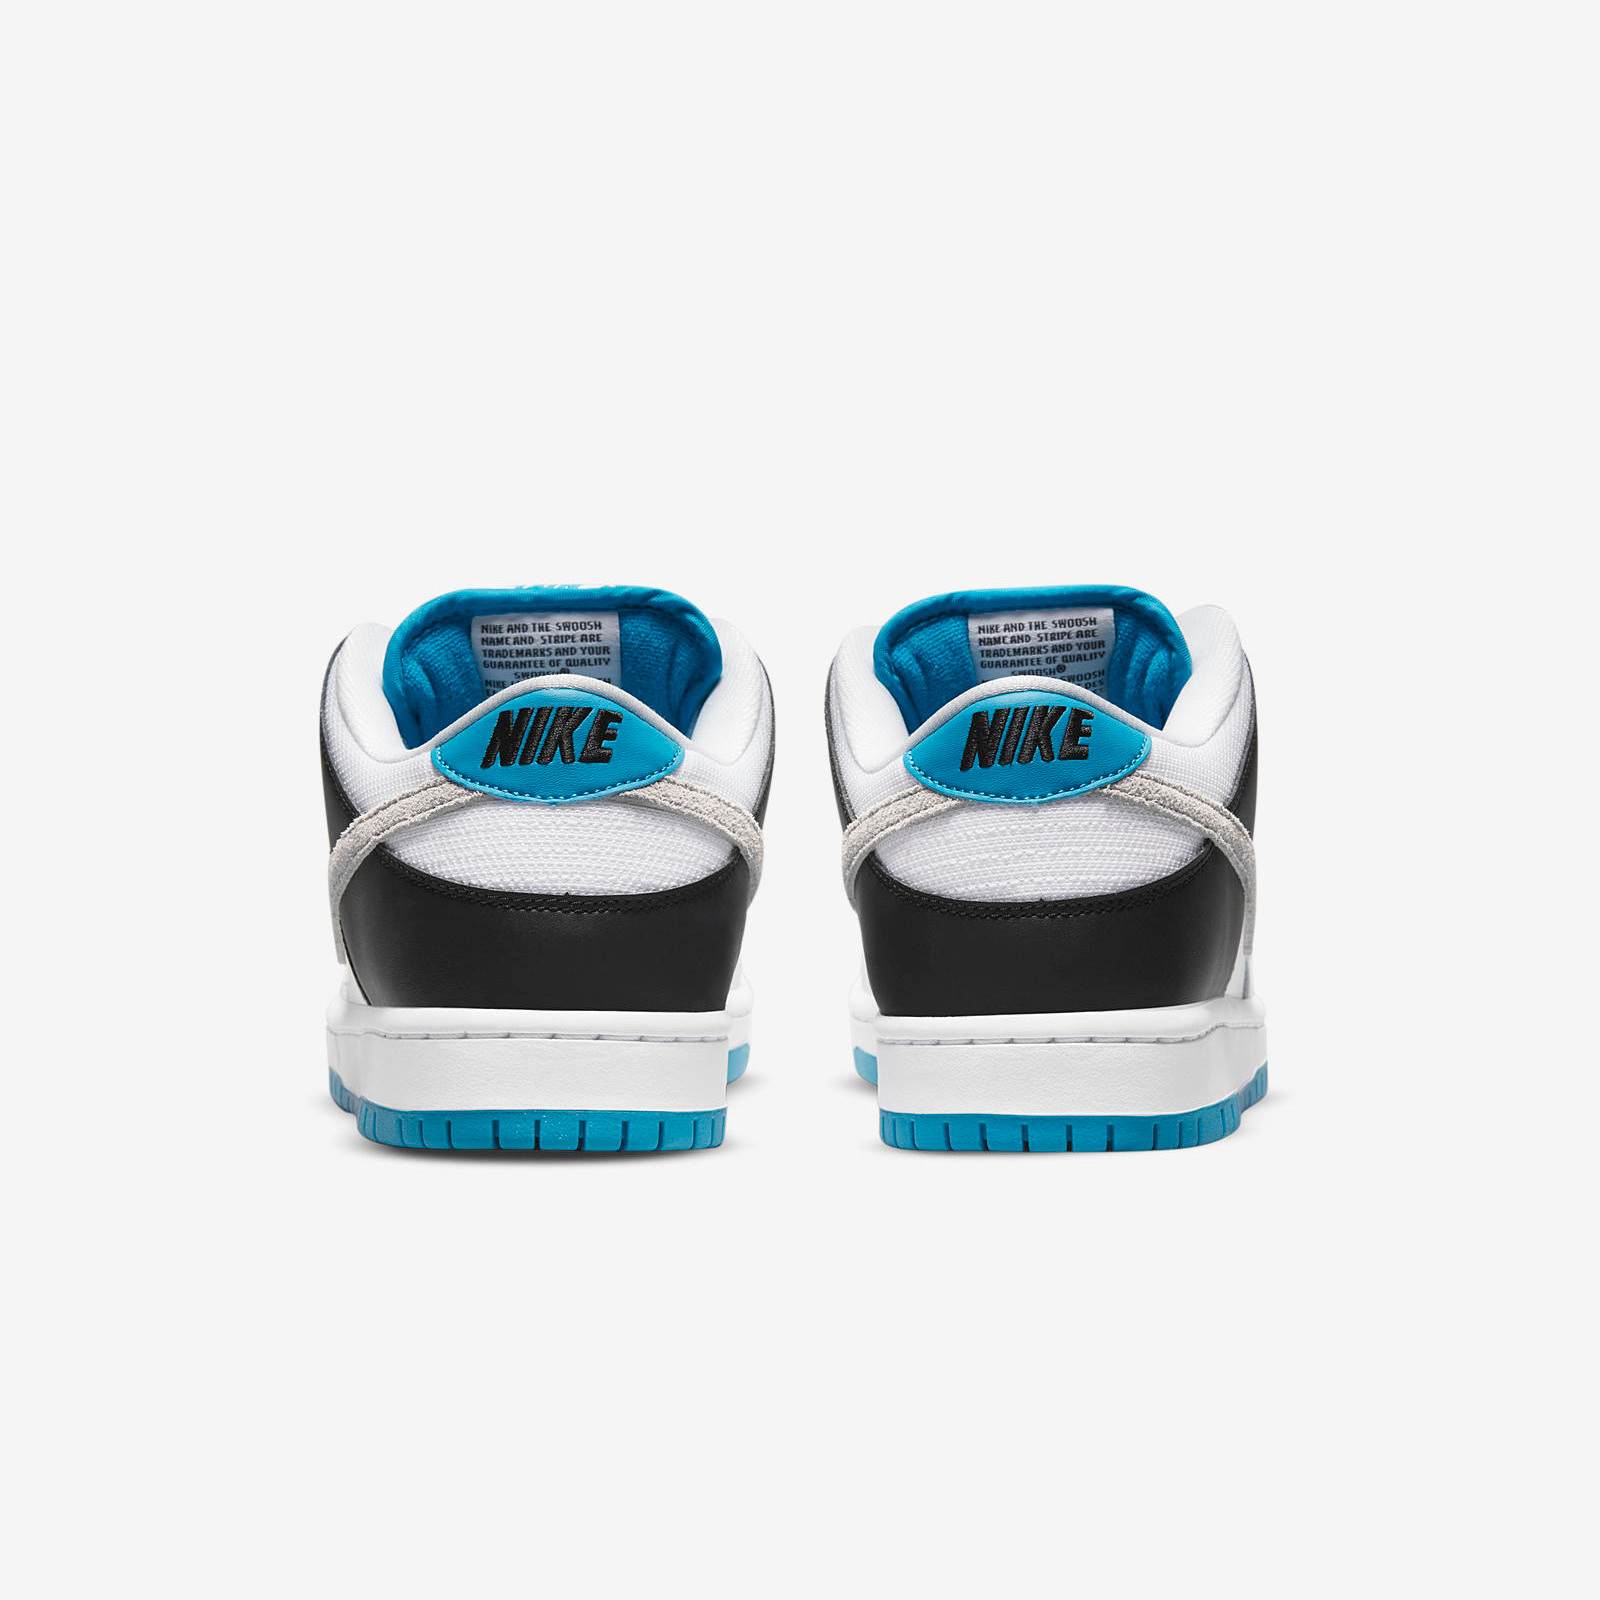 Nike SB Dunk Low
Grey / Blue